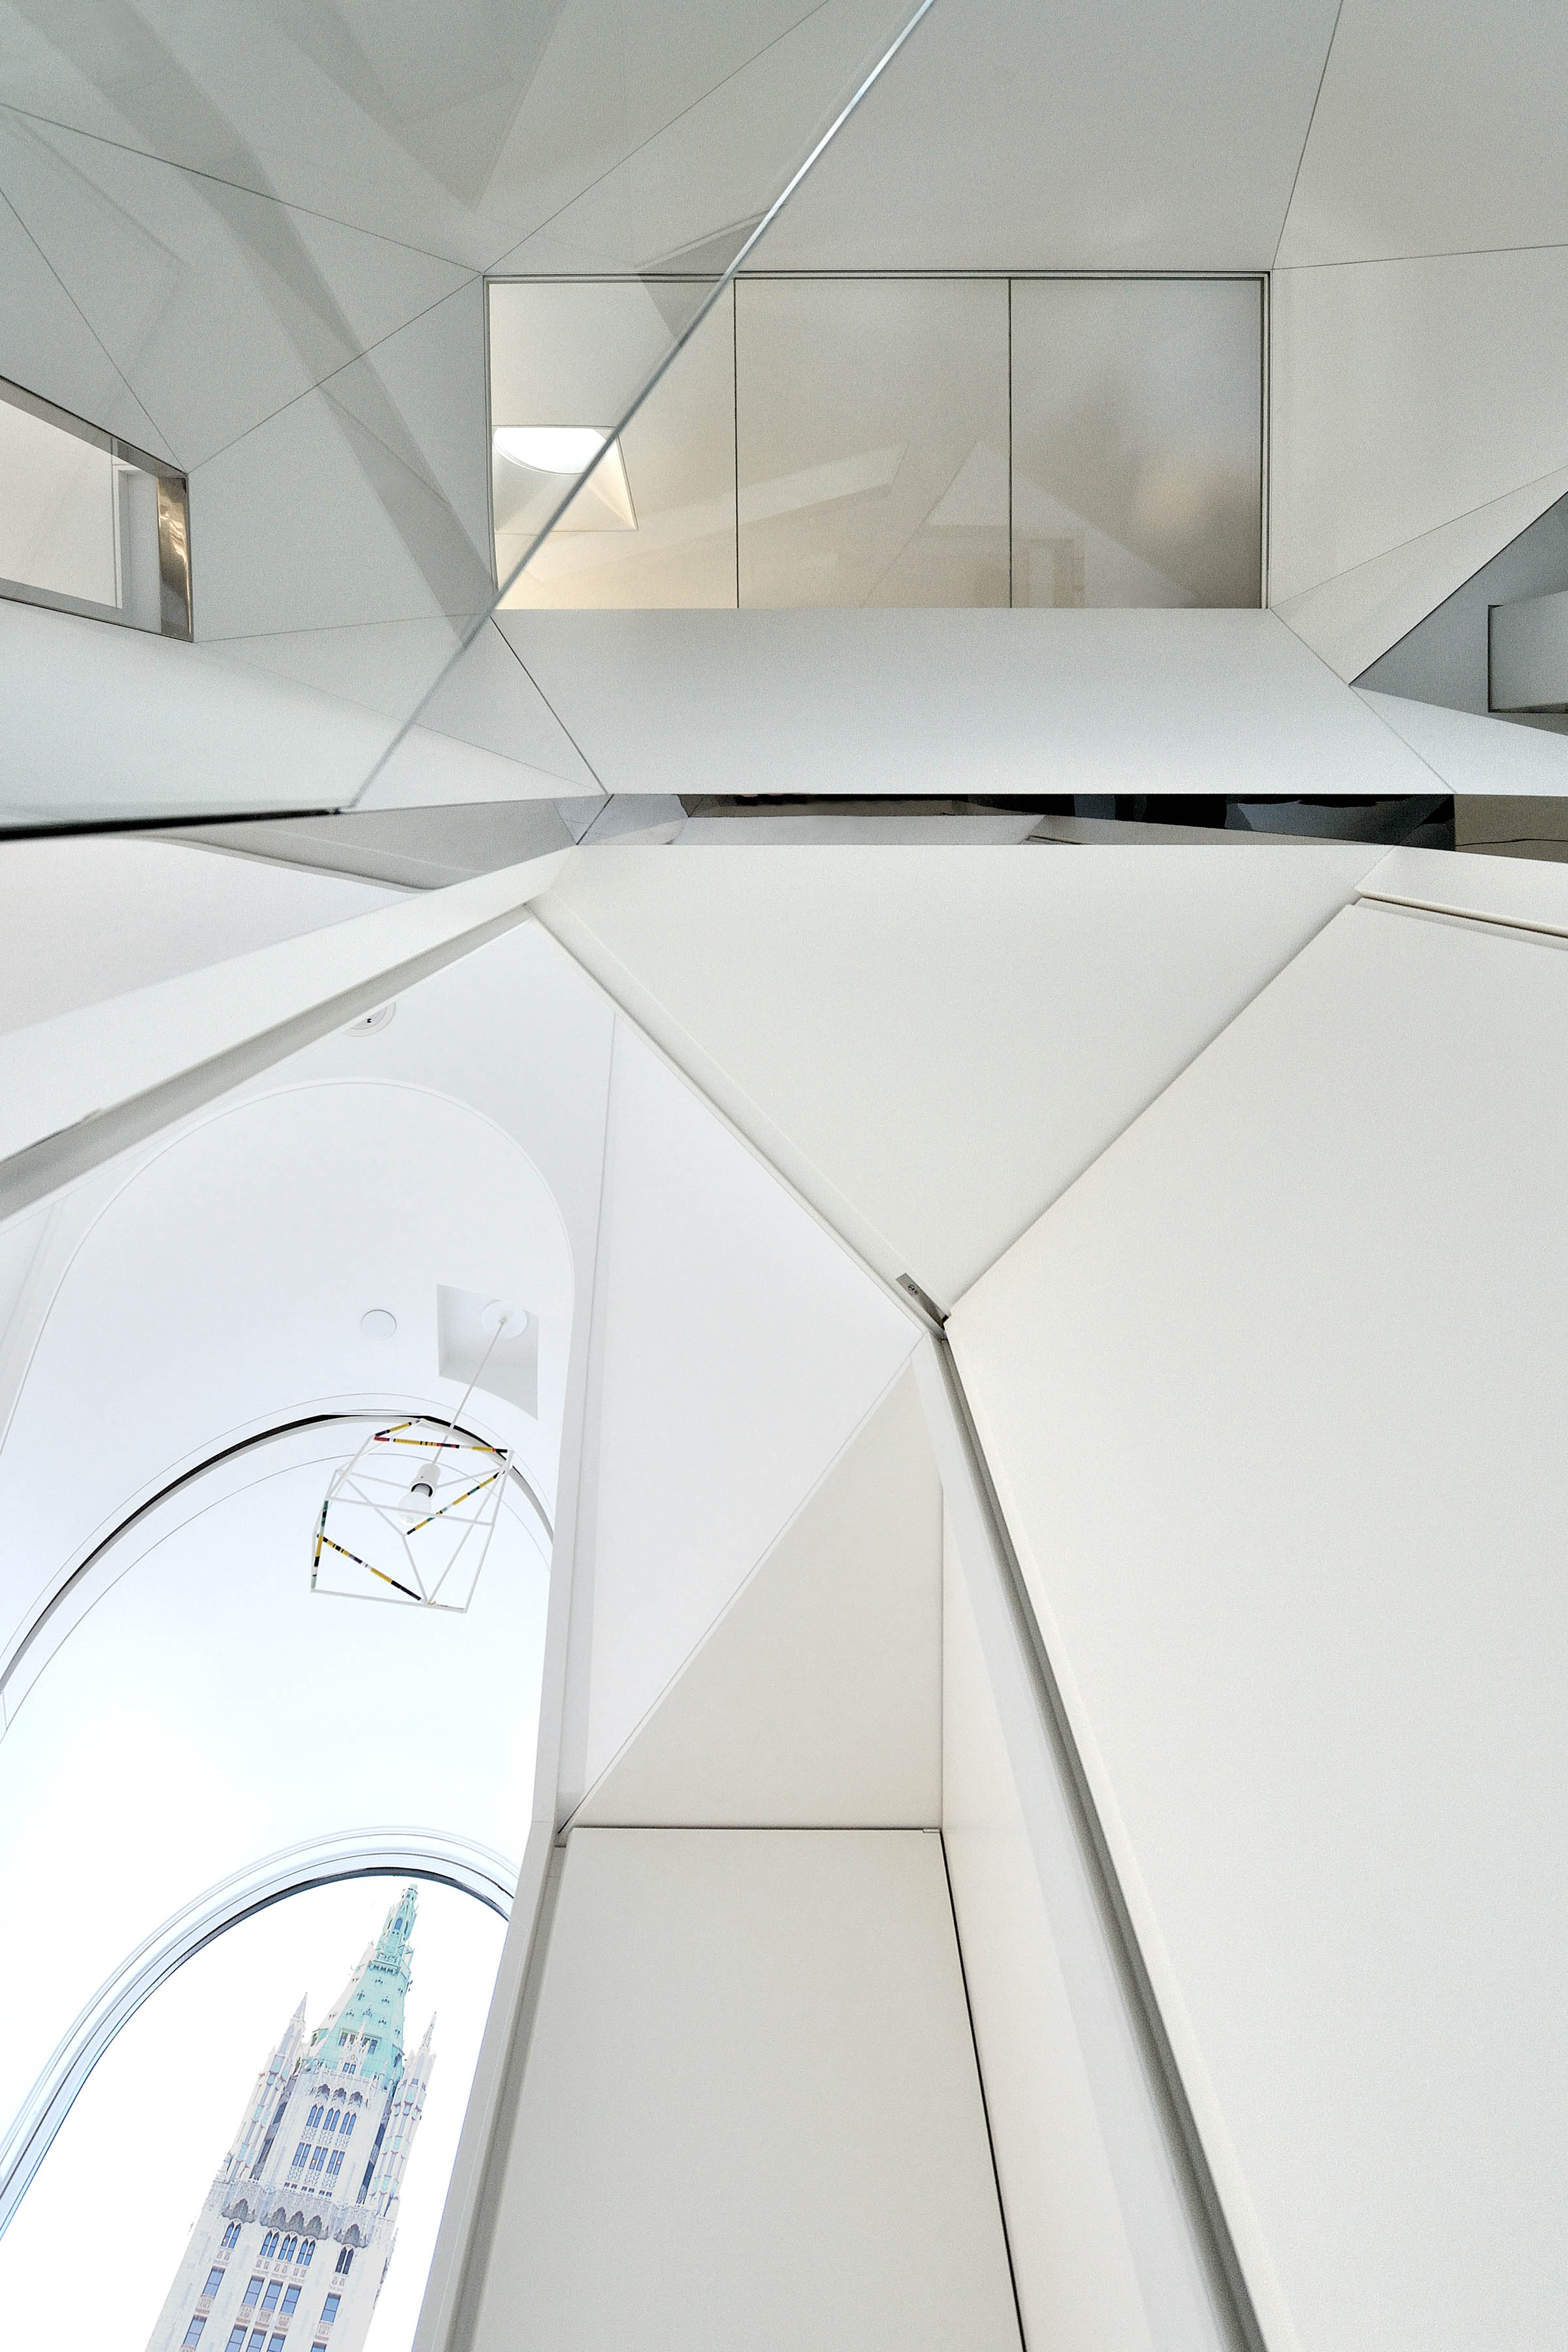 Skyhouse Glass bridge / David Hotson Architect